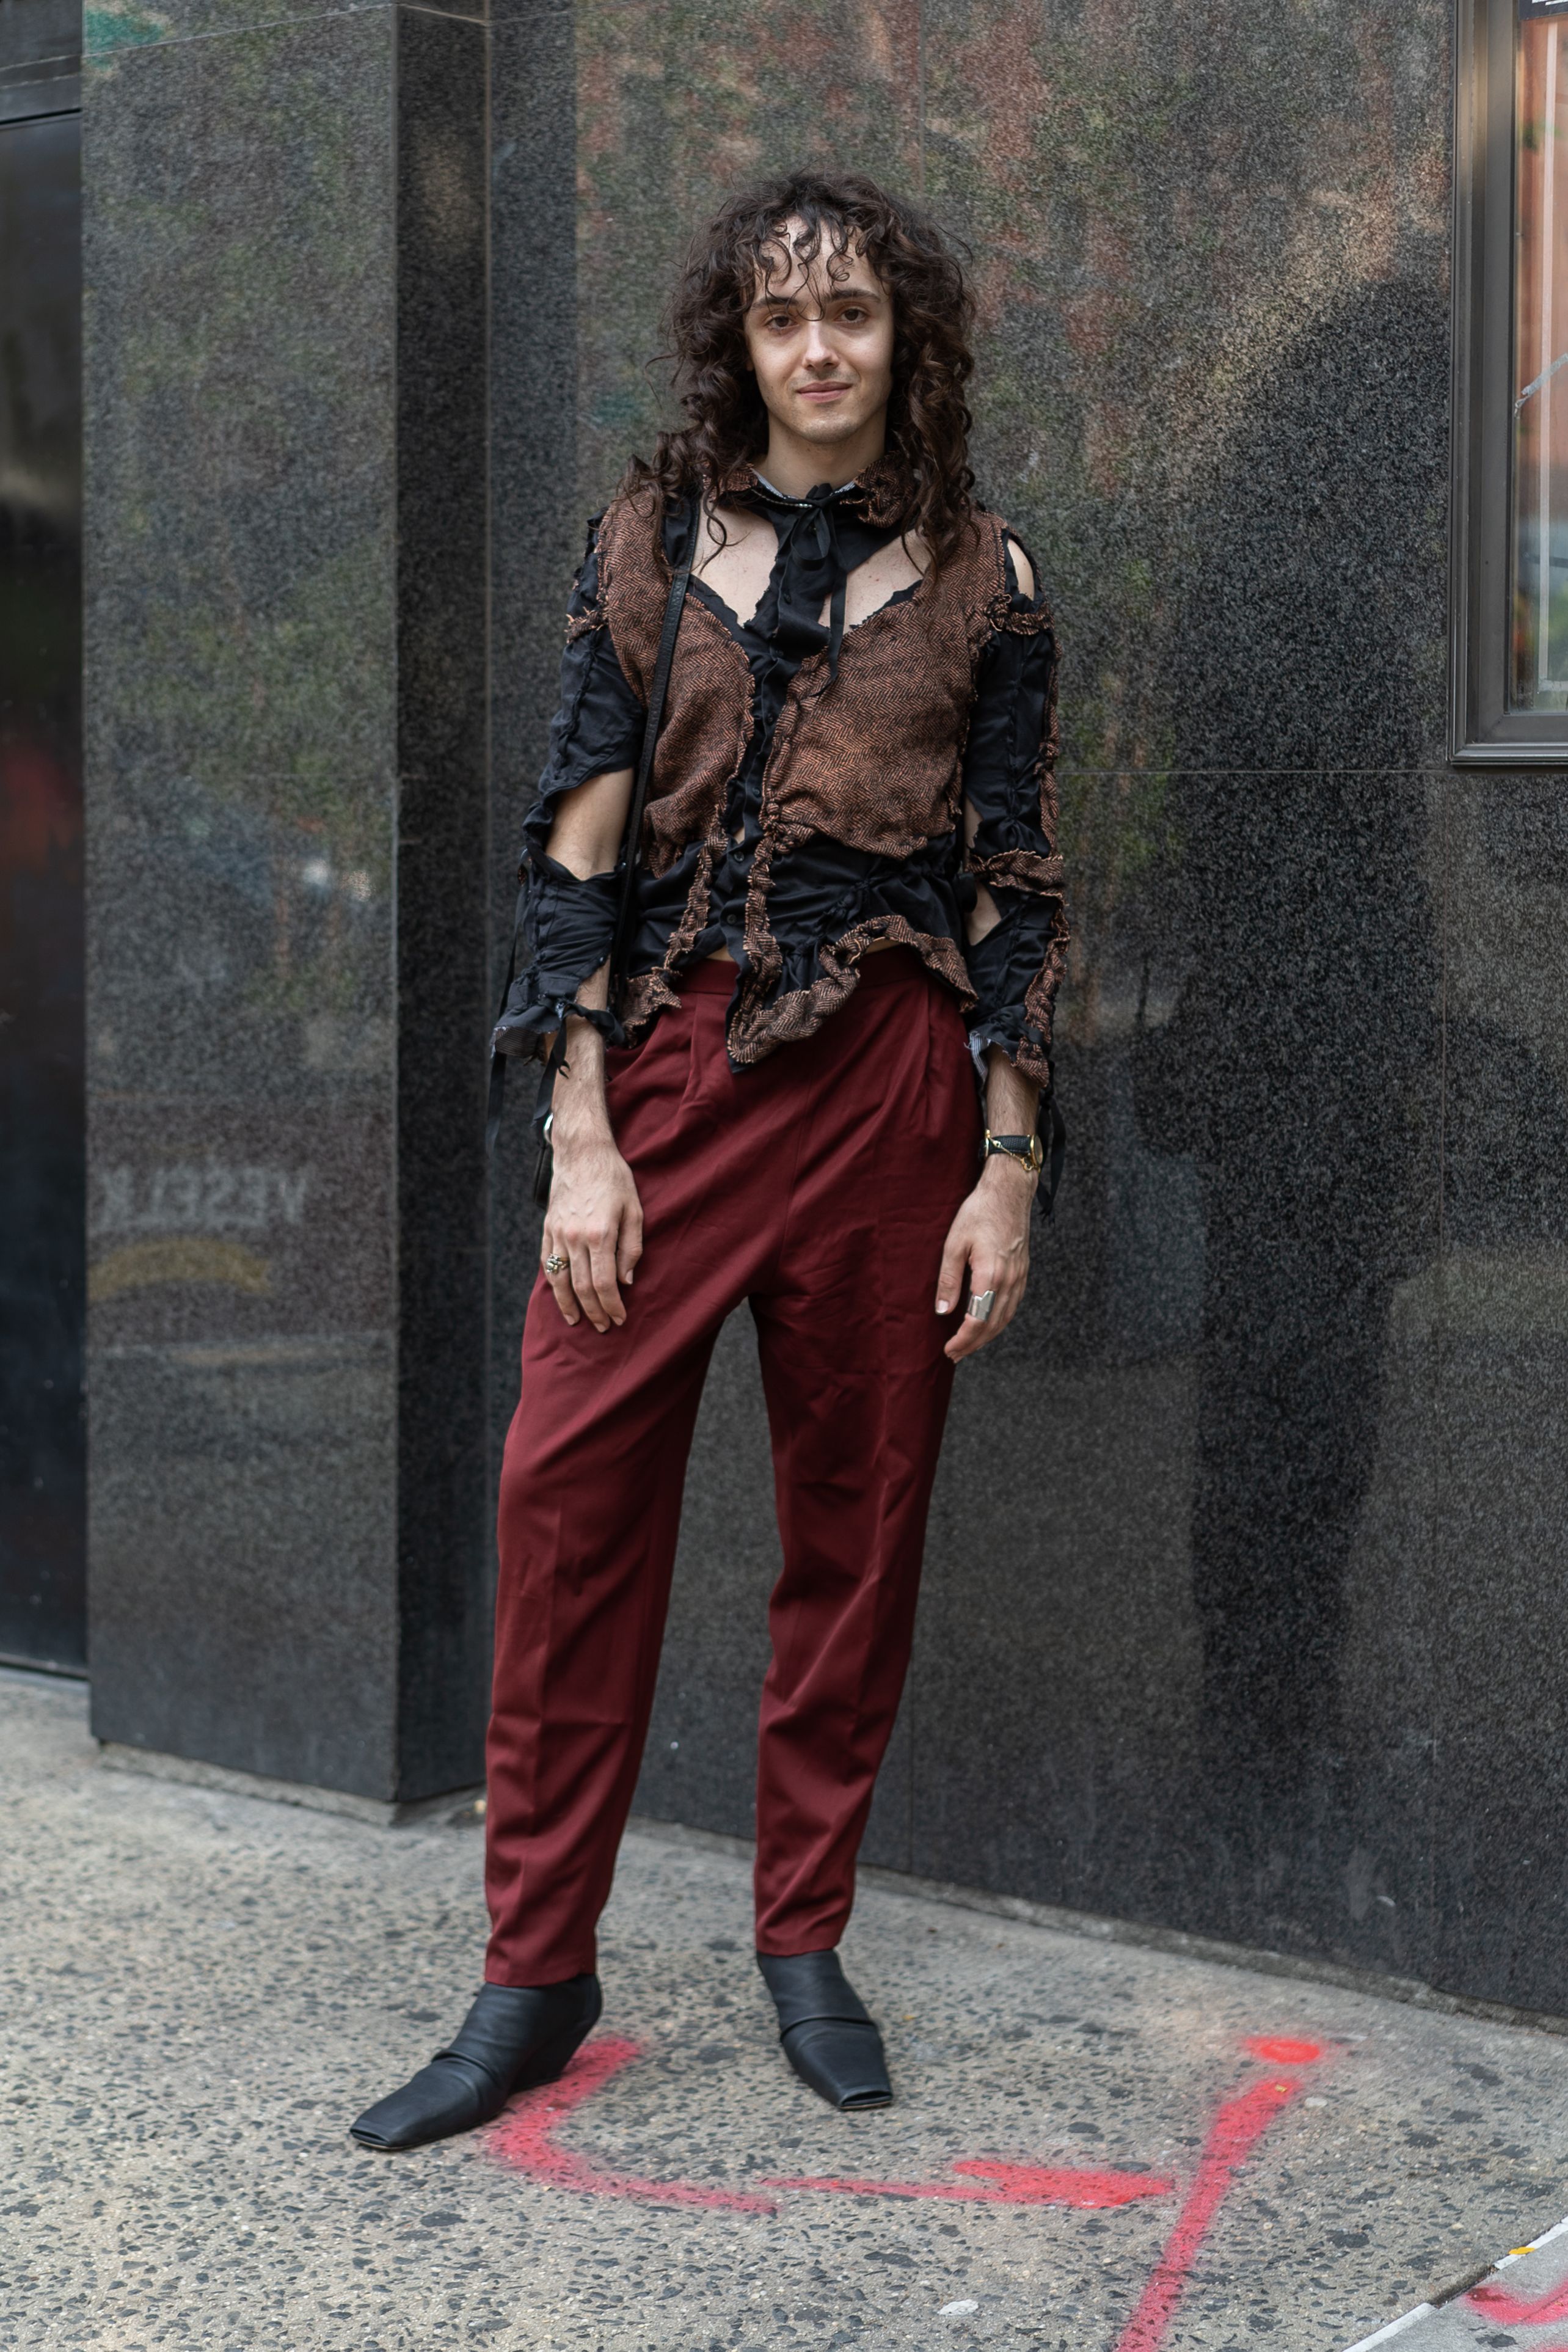 Sofia Richie Brown Louis Vuitton Shirt Street Style Spring Summer 2020